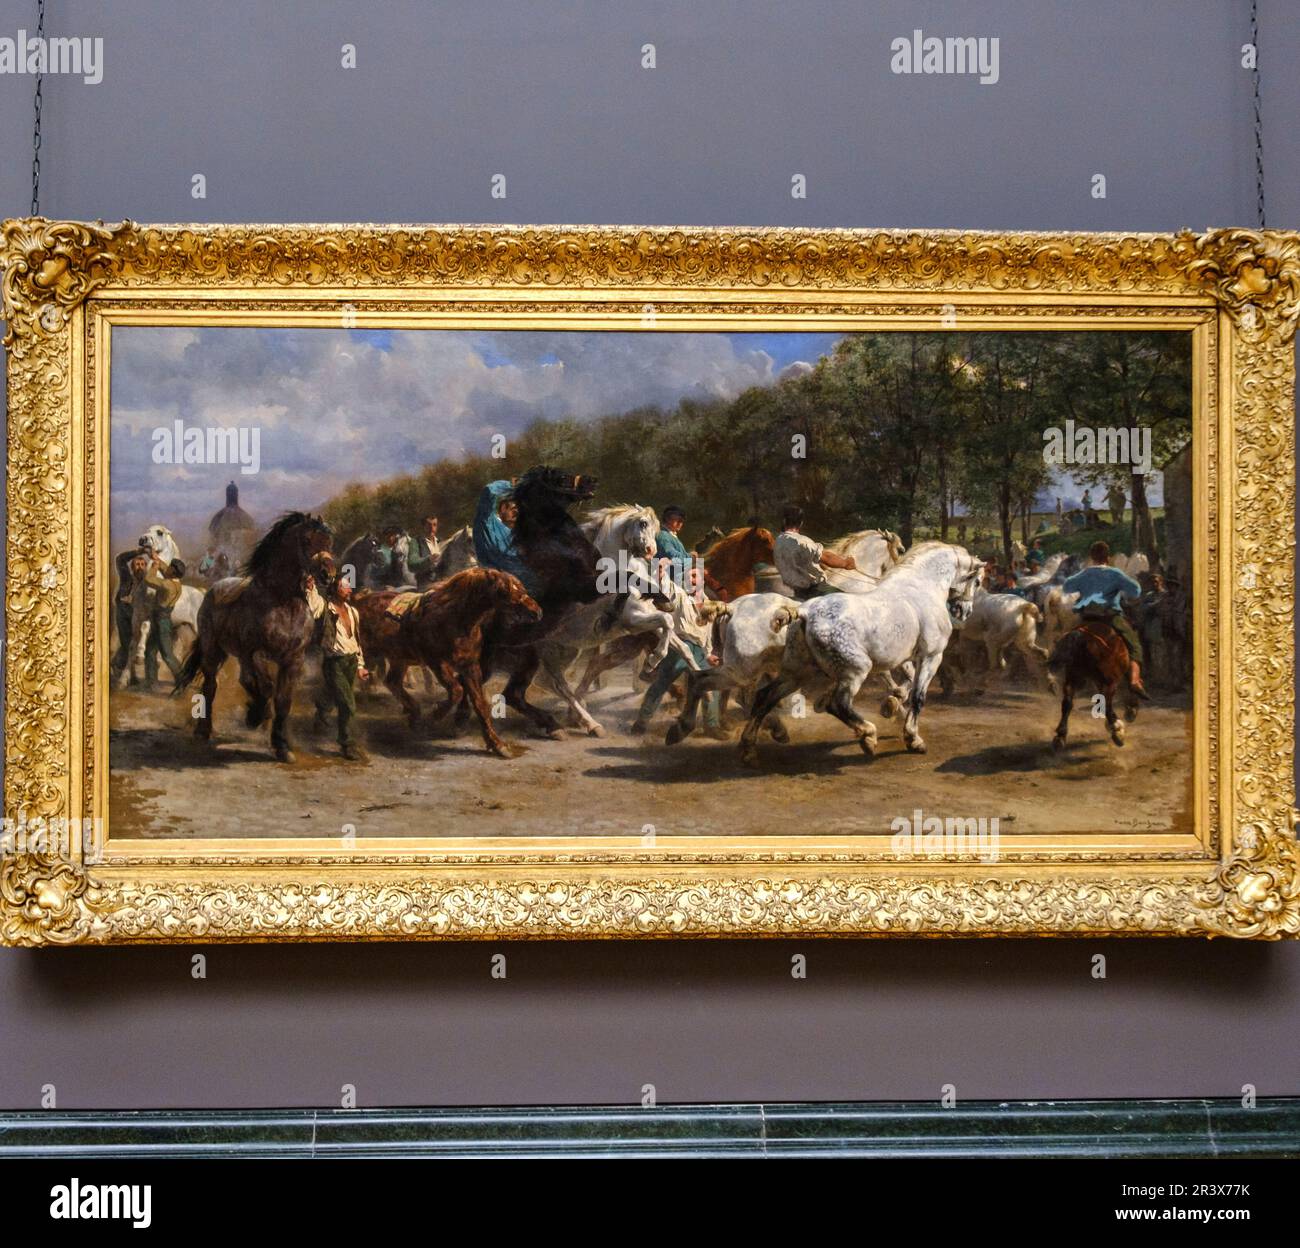 Rosa Bonheur, The Horse Fair, 1855, huile sur toile, National Gallery, Londres, Angleterre, Grande-Bretagne. Banque D'Images